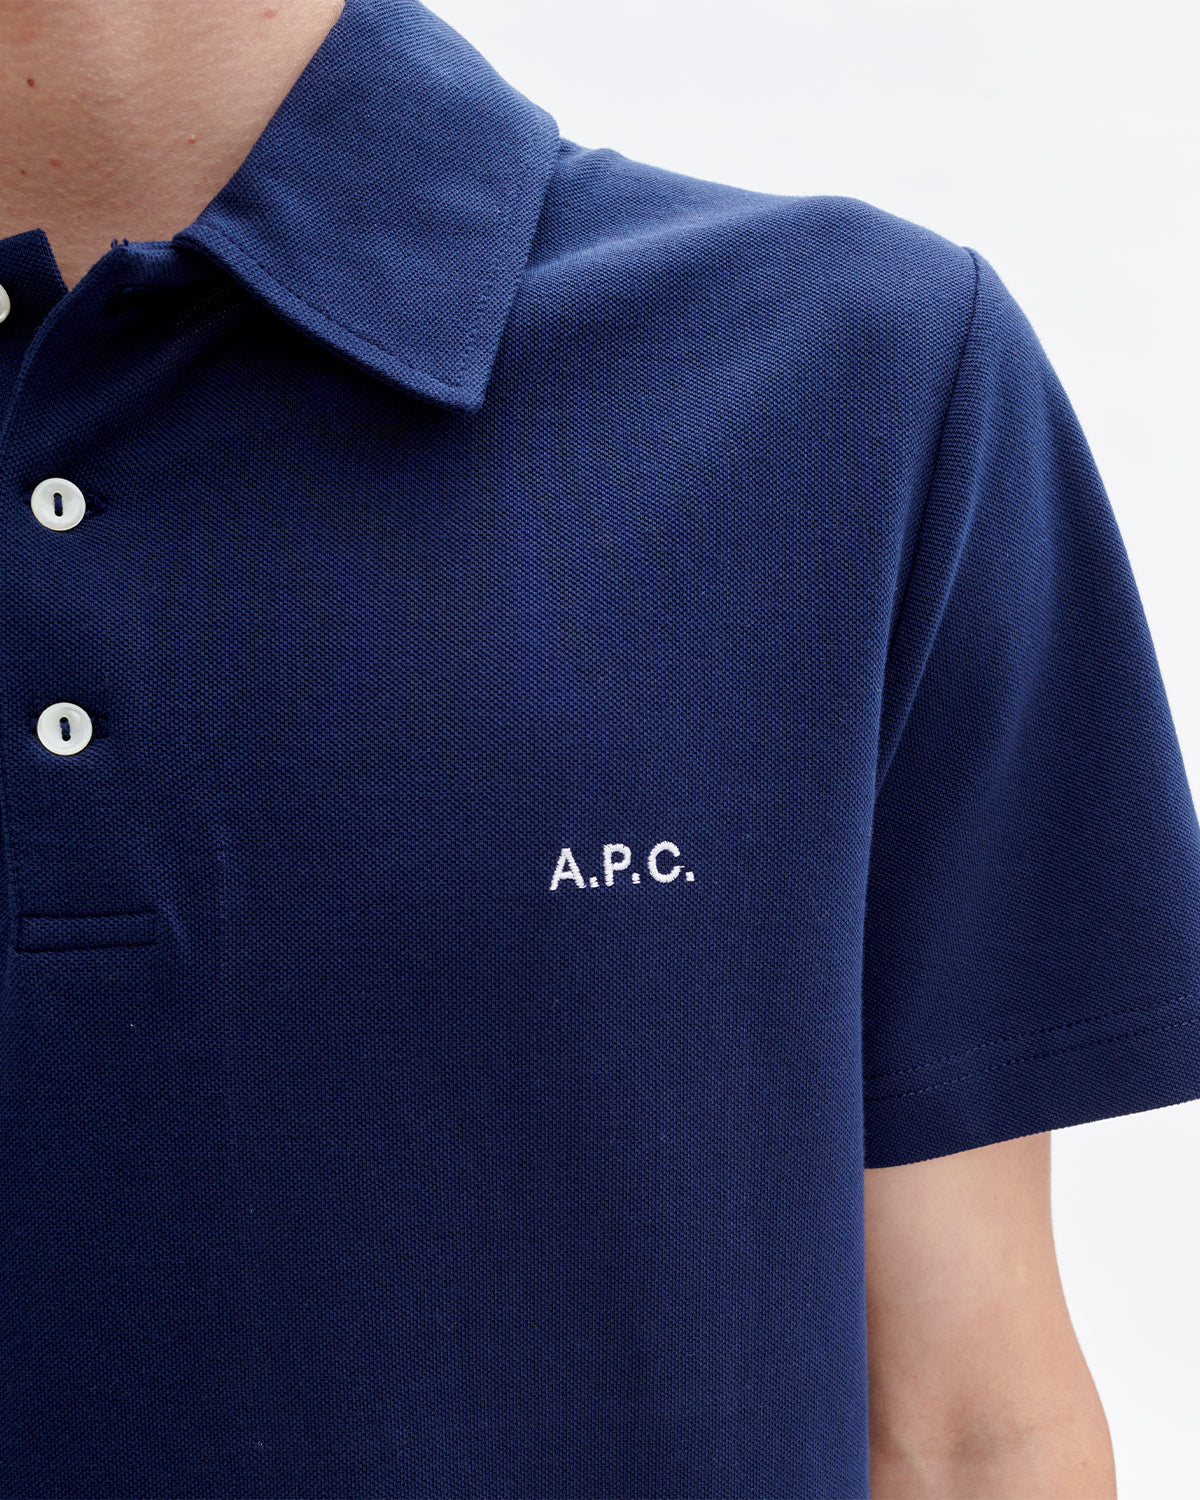 A.P.C. Polo Austin Dark Navy T-shirt S/S Men